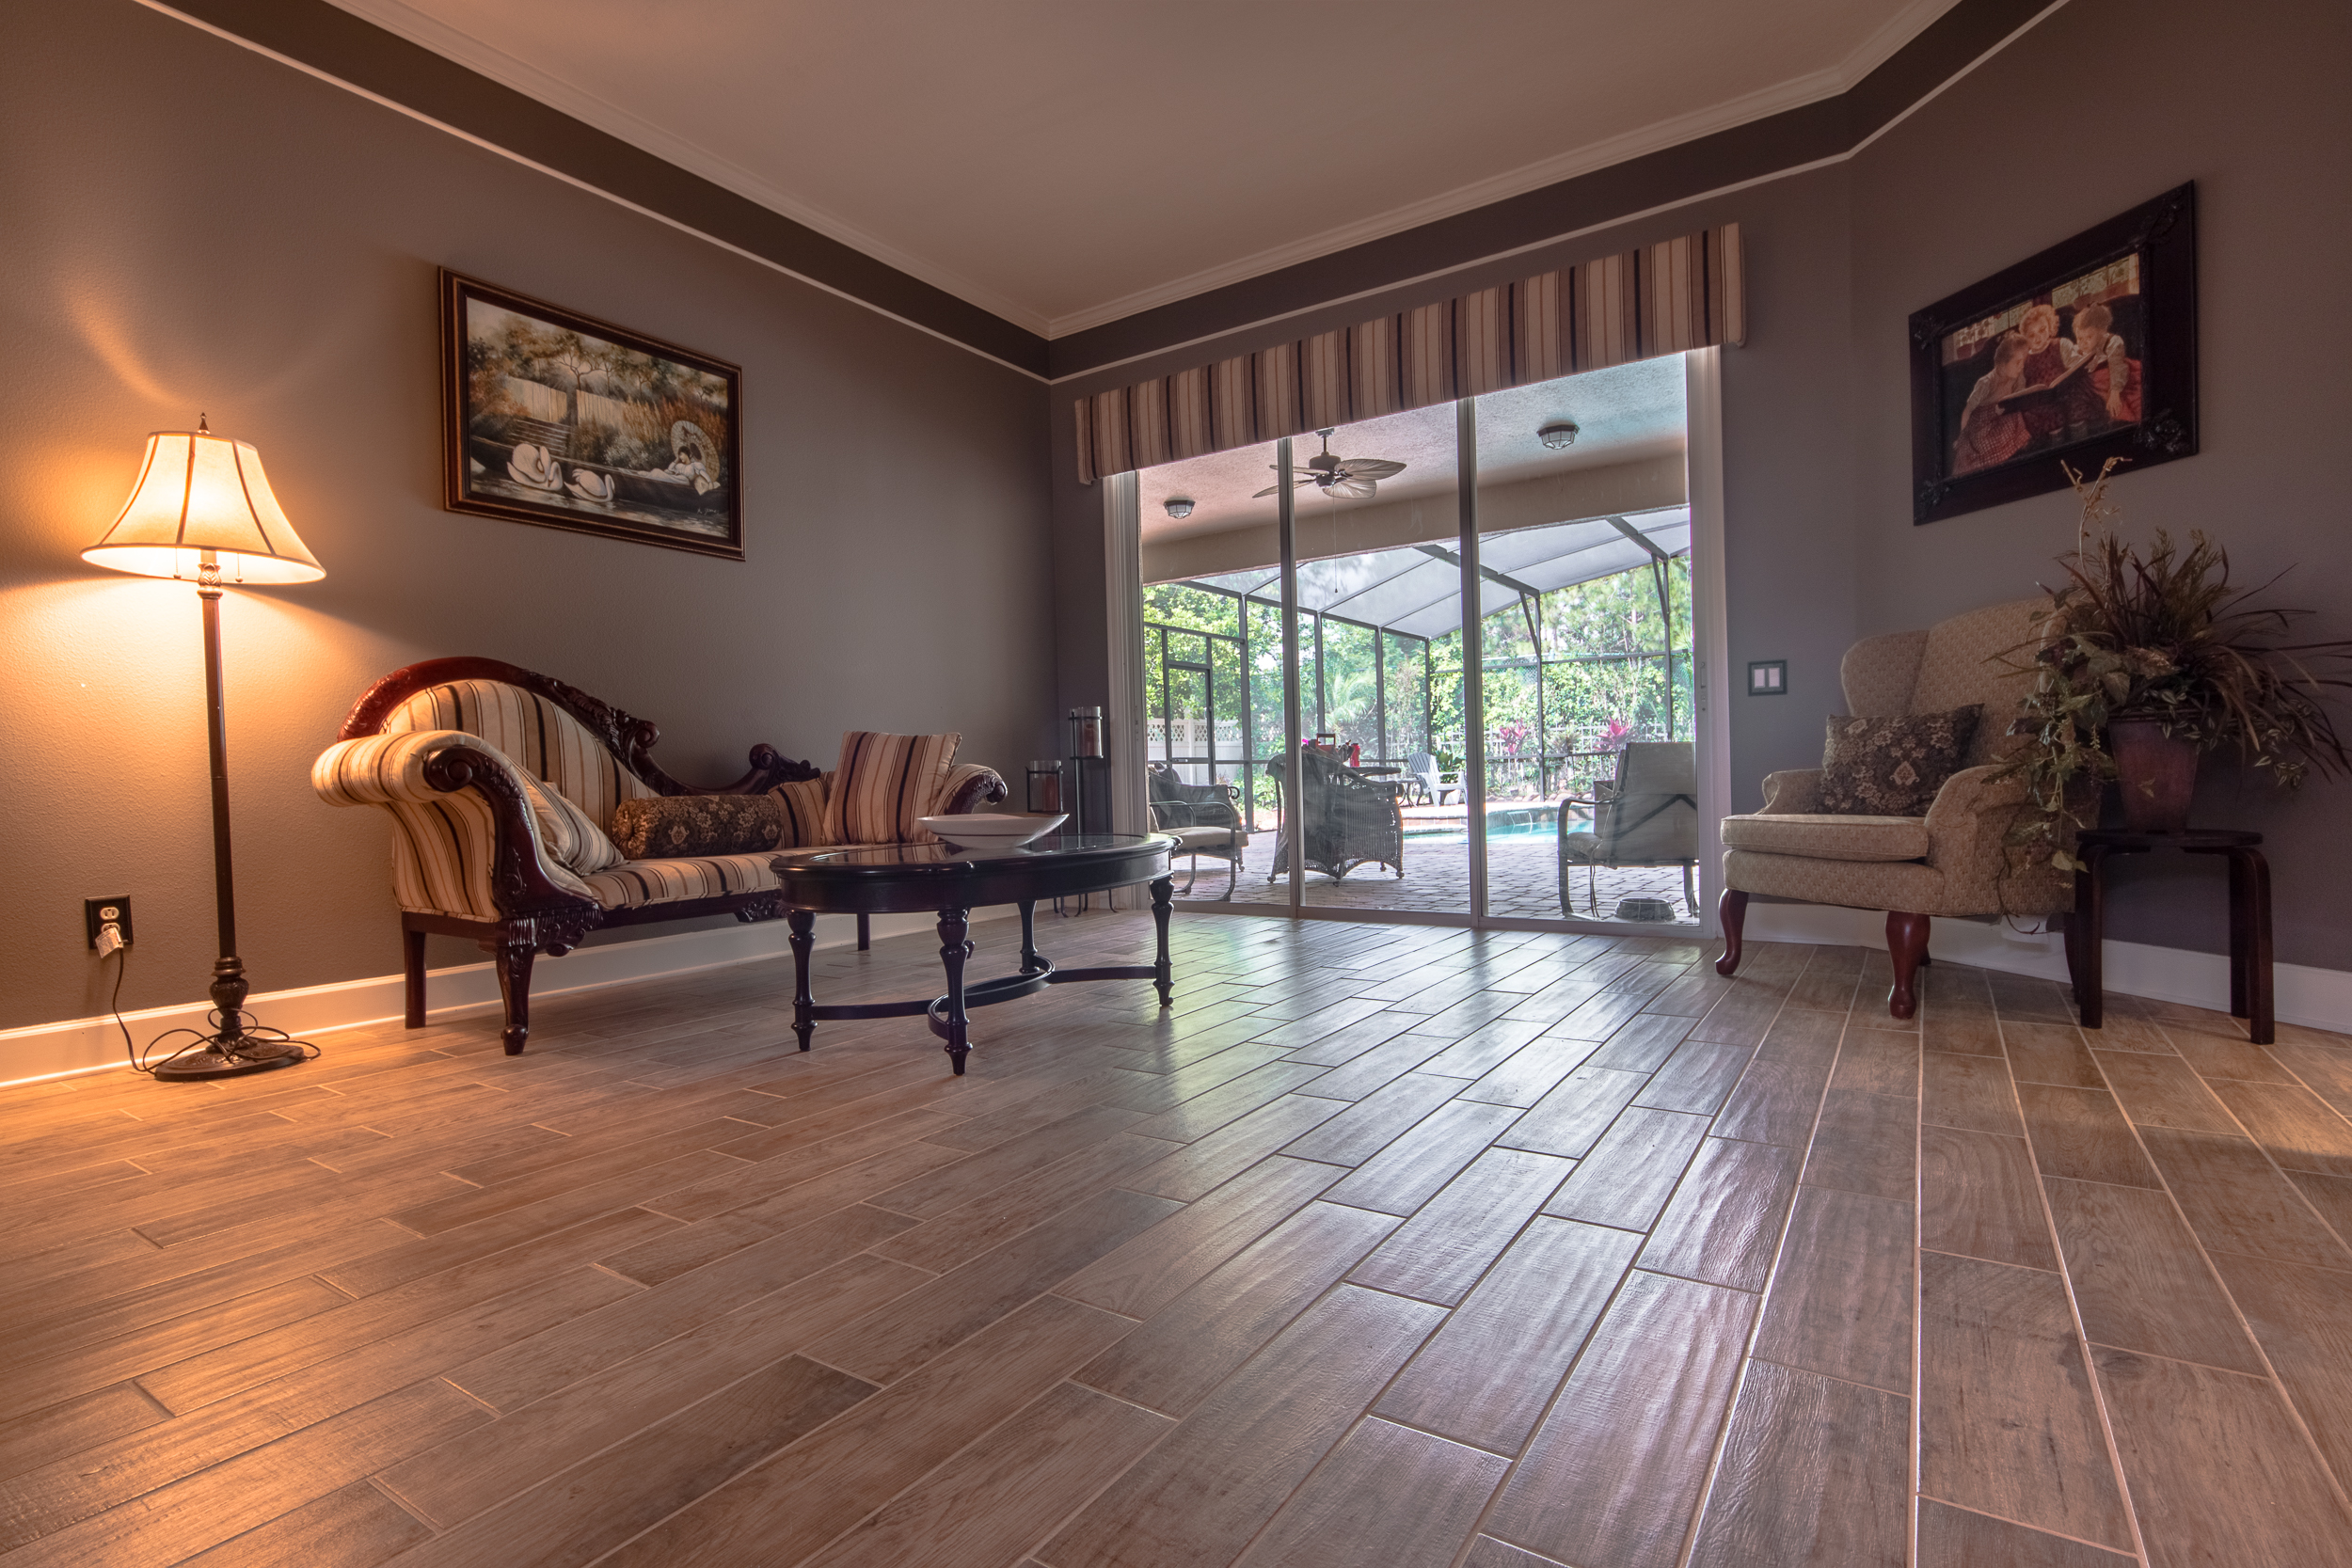 Wood-Look Tile - Ability Wood Flooring
 Best Floor Tiles For Living Room